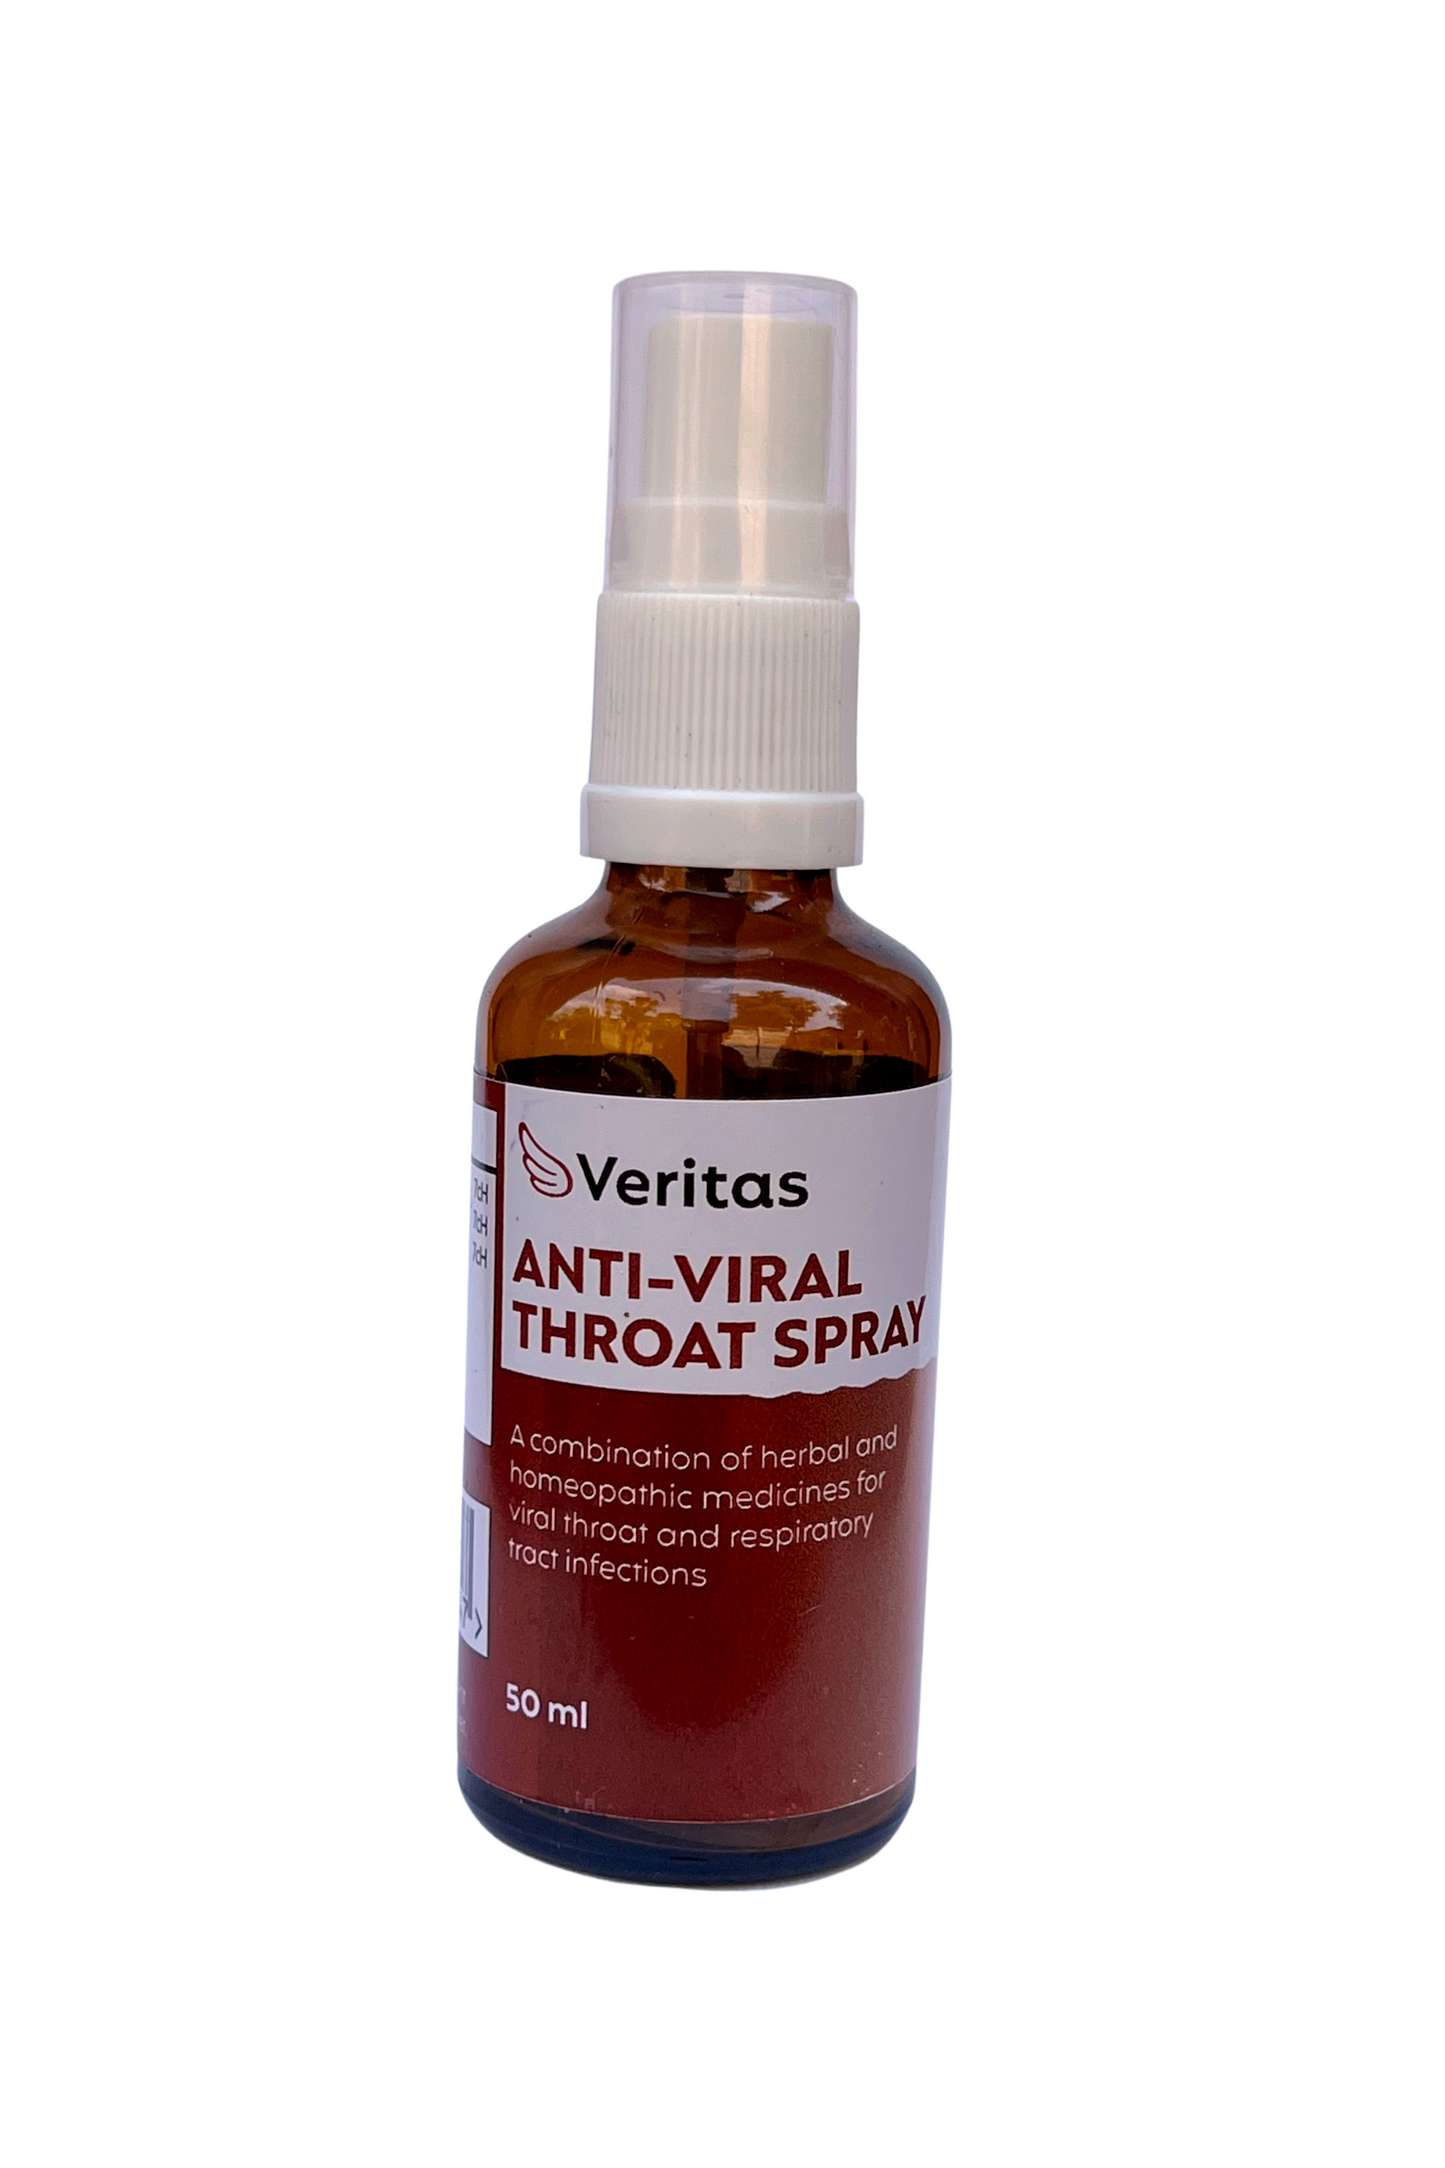 Anti-viral throat spray